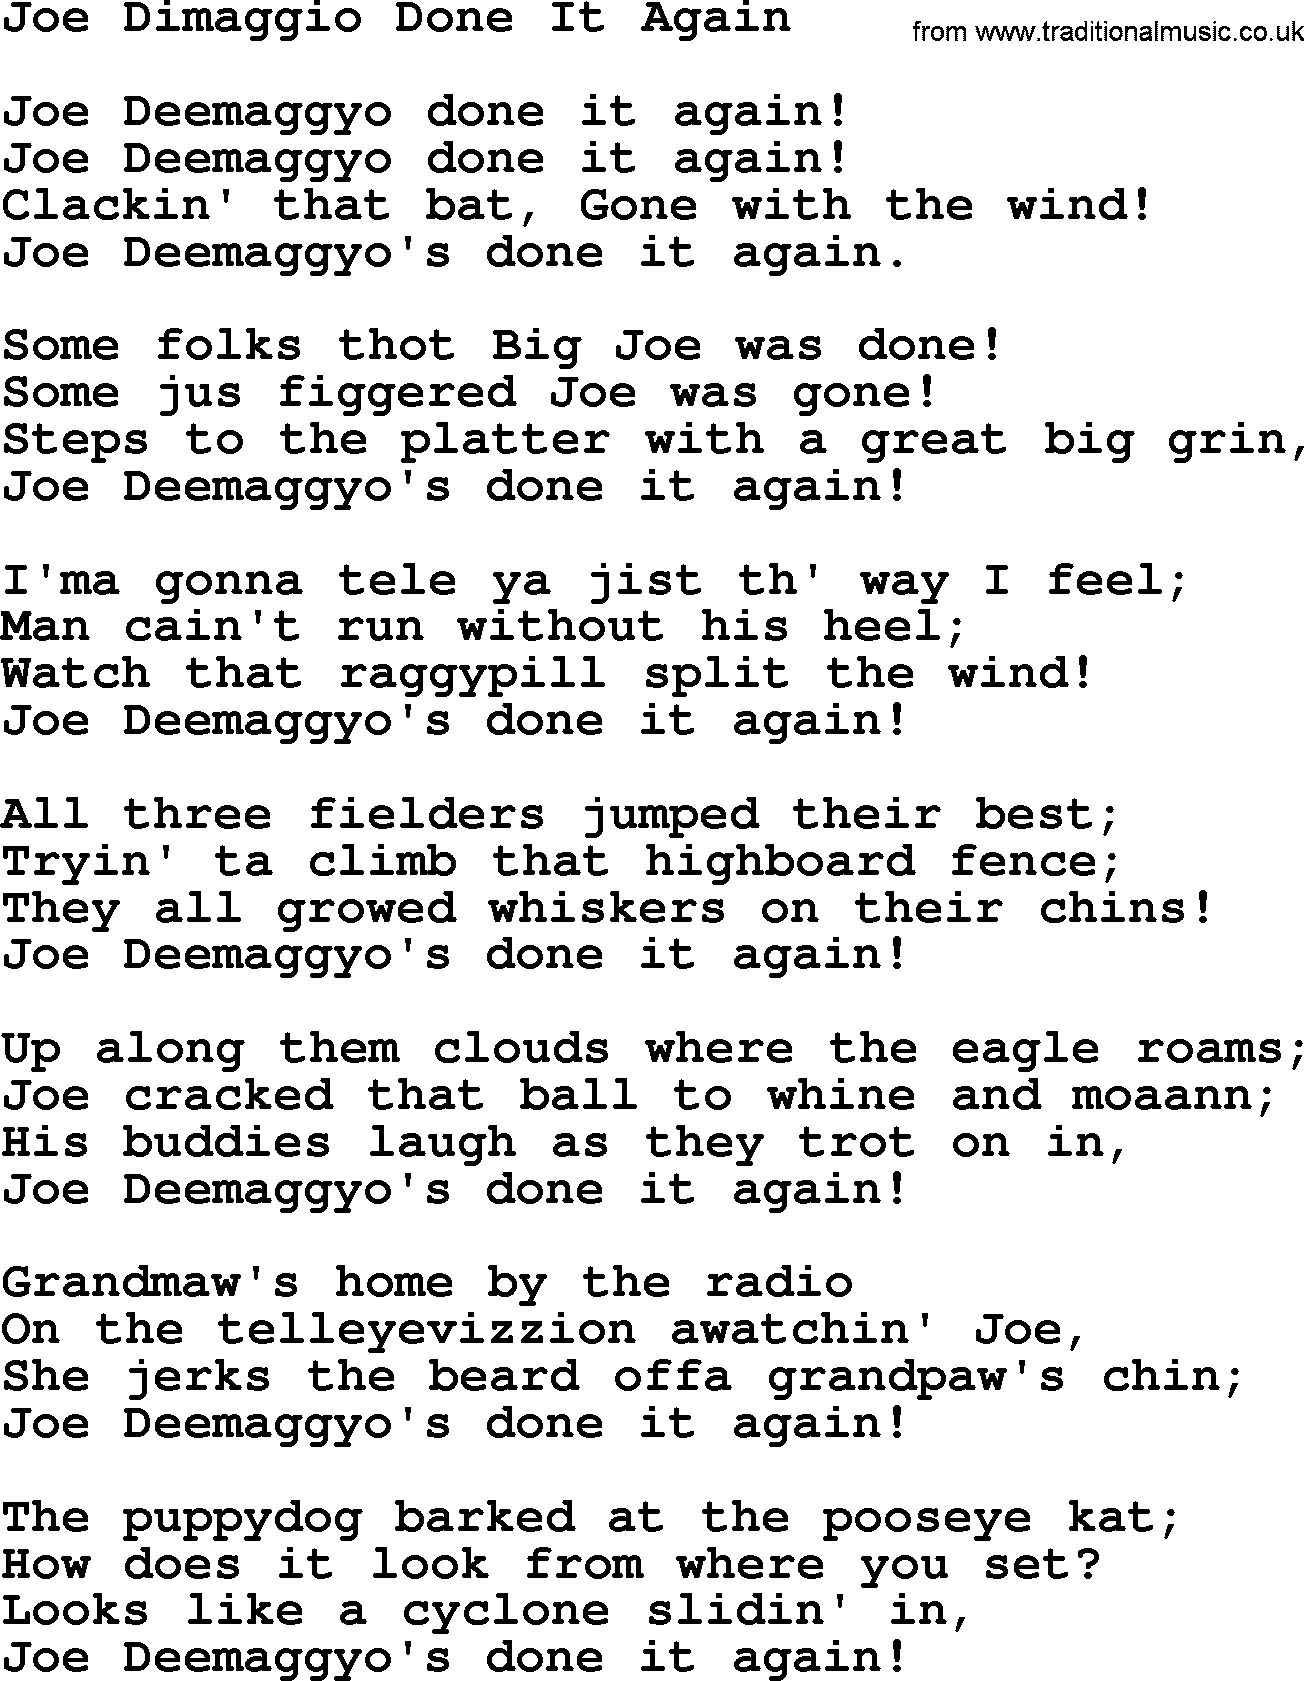 Woody Guthrie song Joe Dimaggio Done It Again lyrics